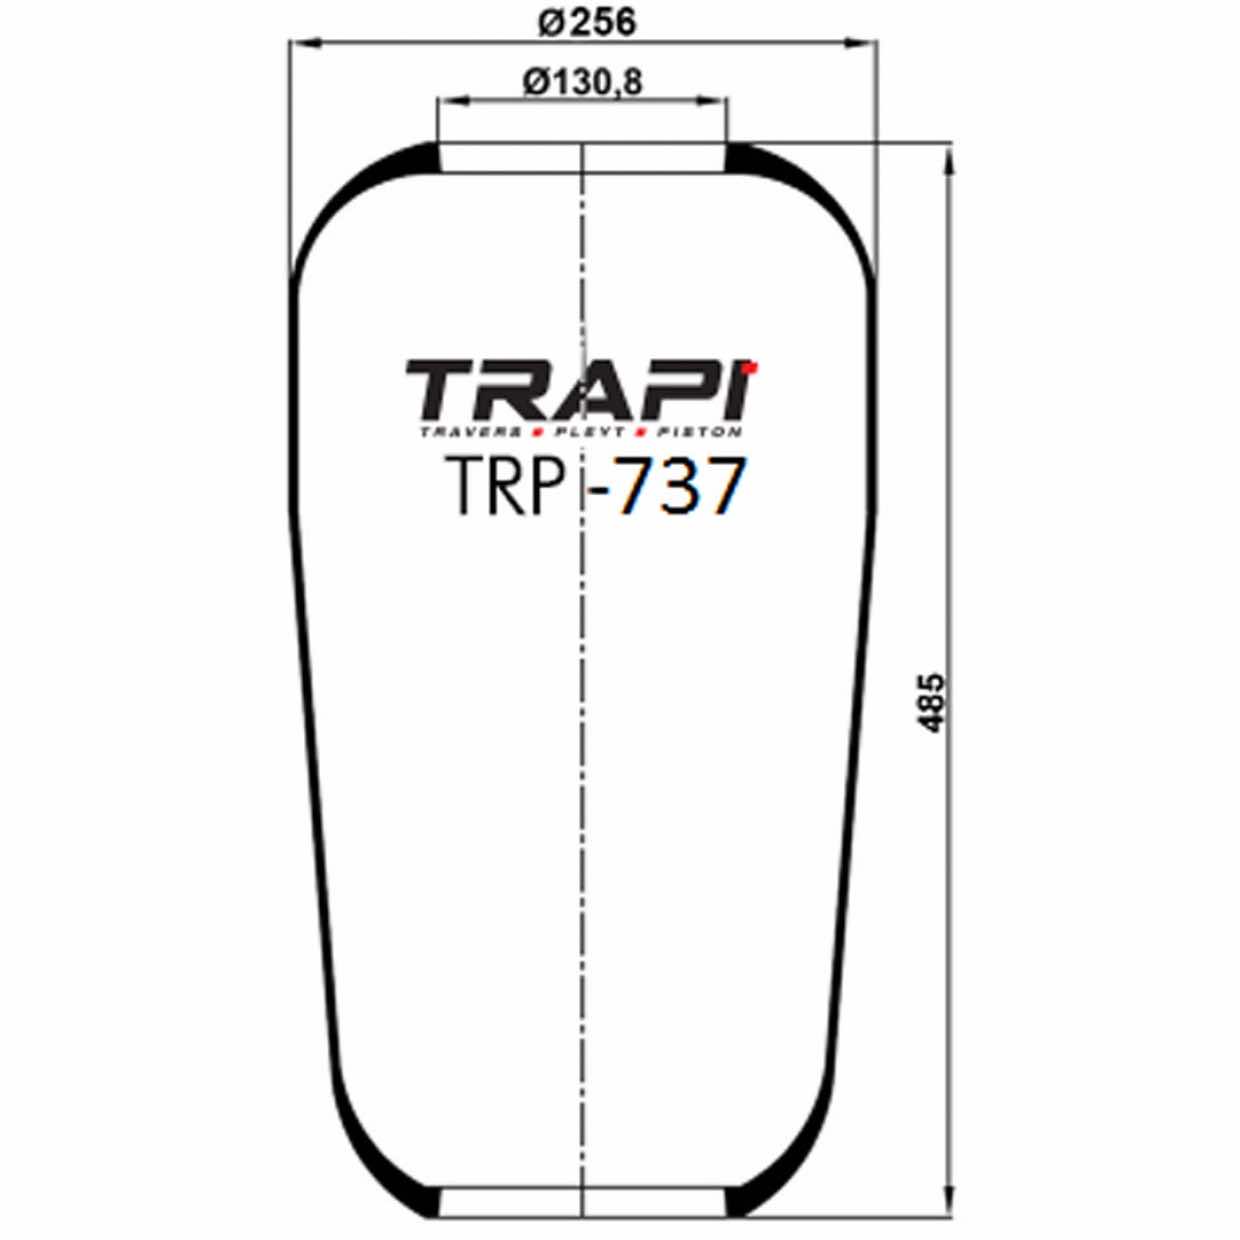 TRP-737